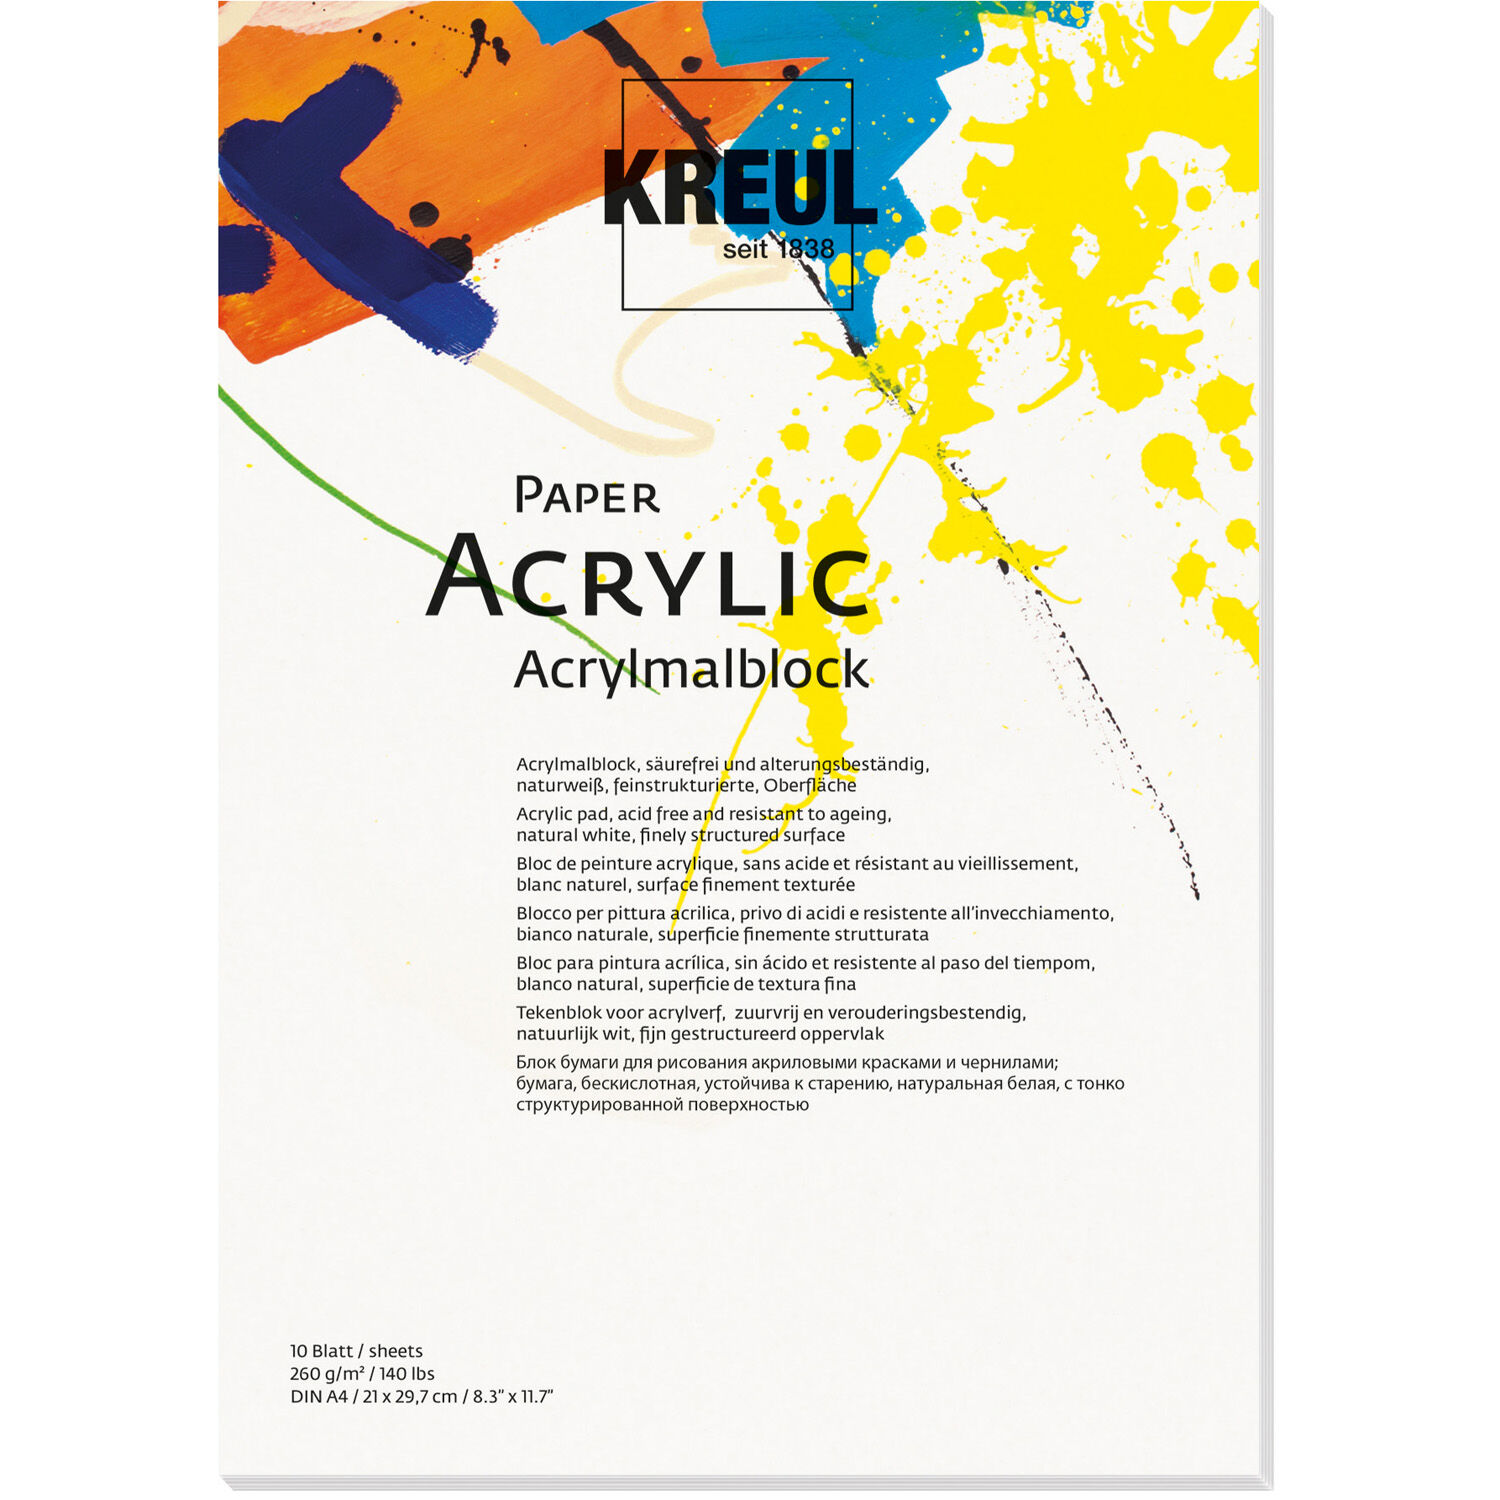 NEU Kreul Acrylmalblock Paper Acrylic, DIN A4, 260g/qm, 10 Blatt